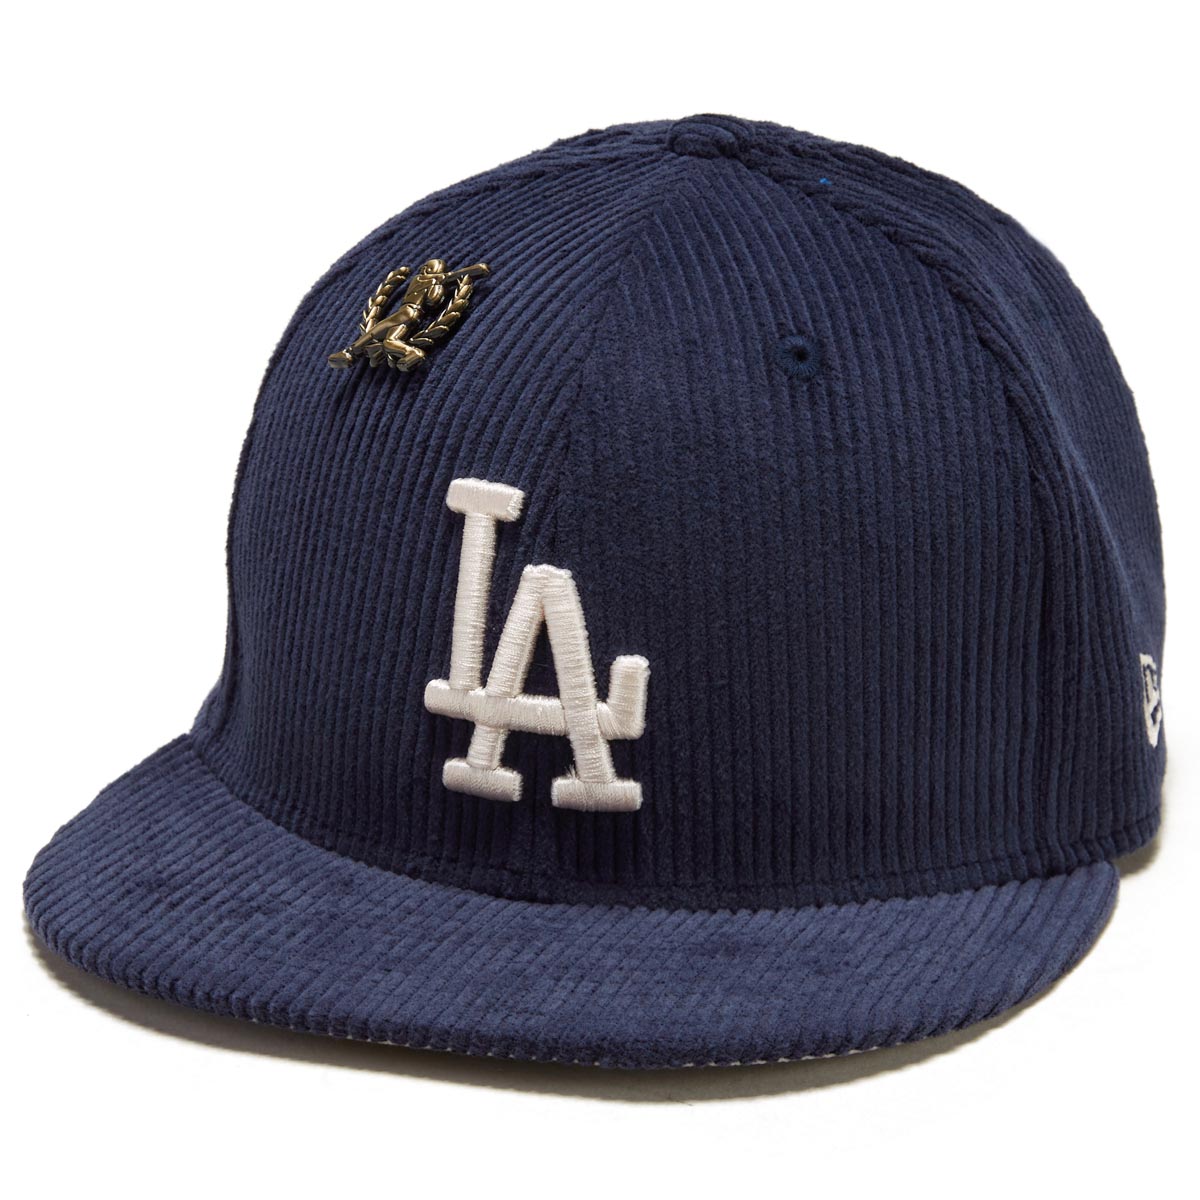 New Era 5950 Letterman Pin Hat - Los Angeles Dodgers image 1